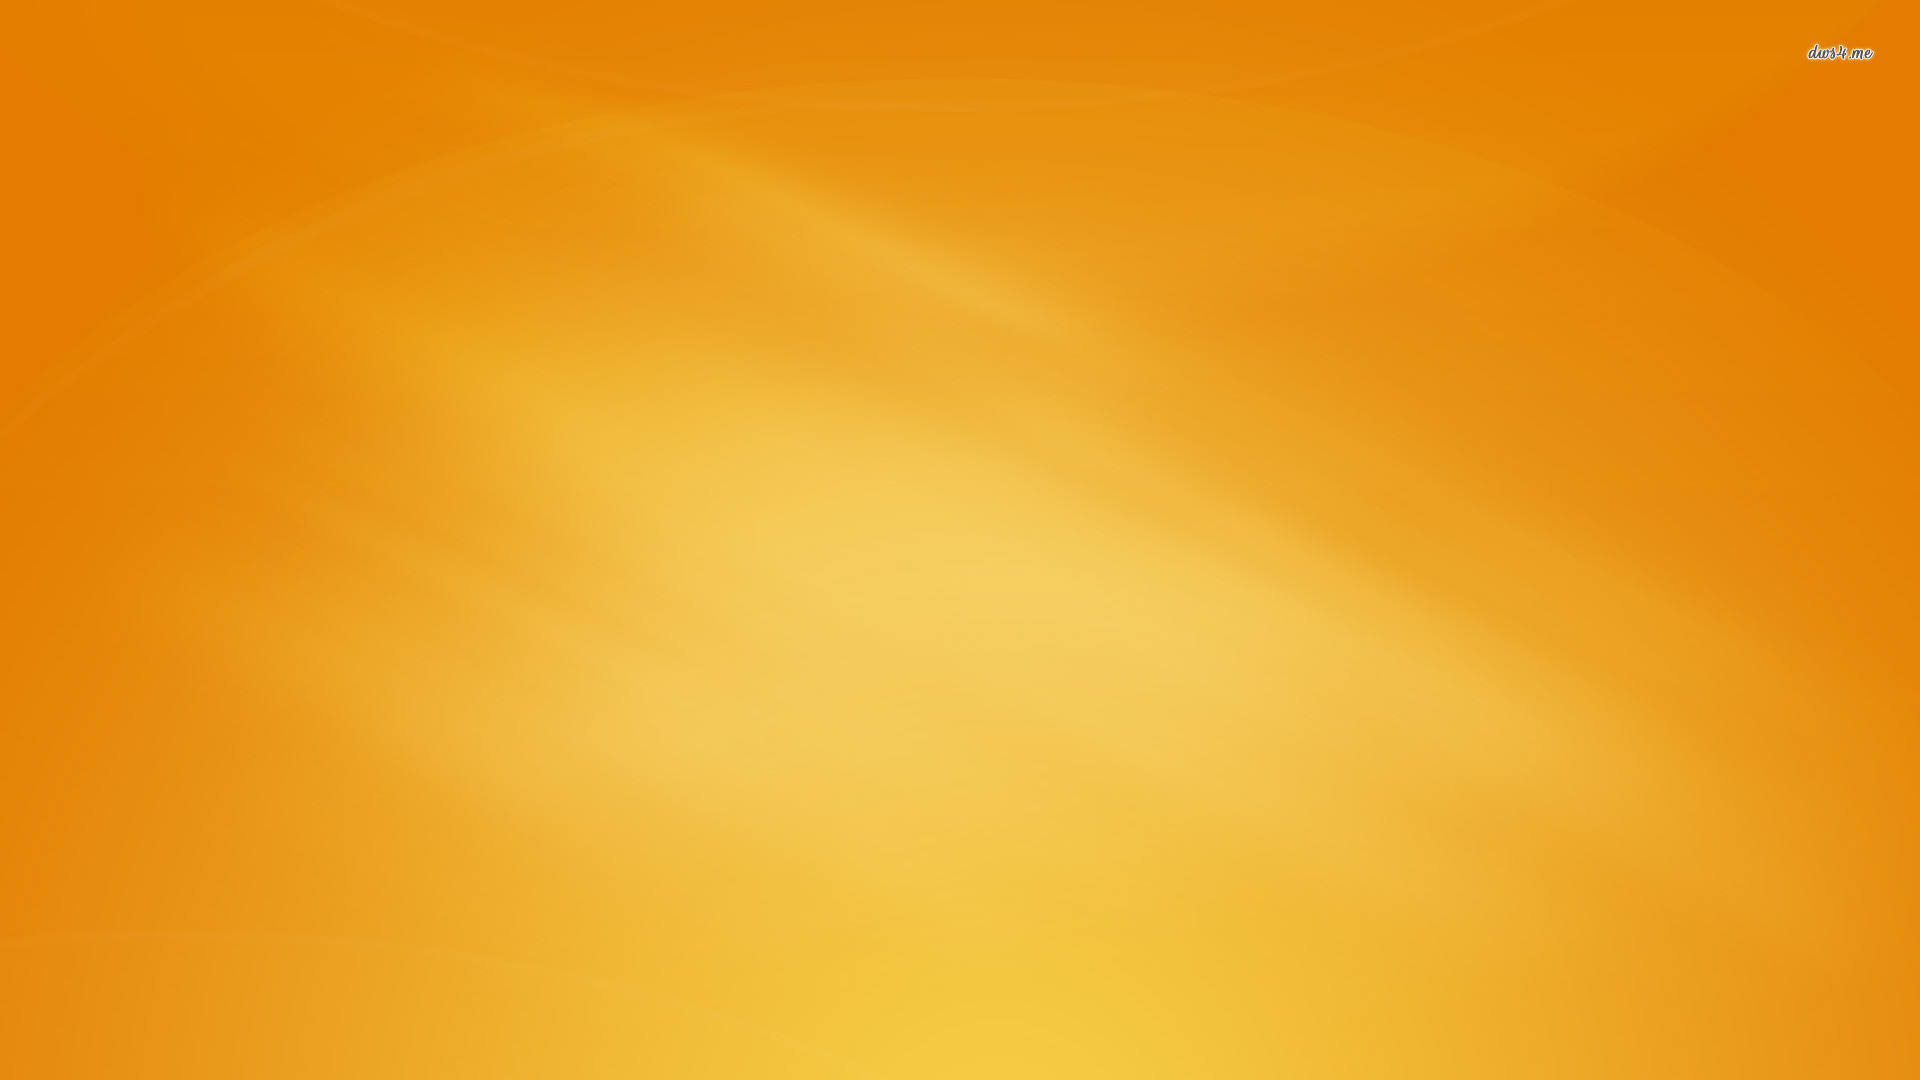 1920x1080 Plain Orange Abstract Background Wallpaper 28392